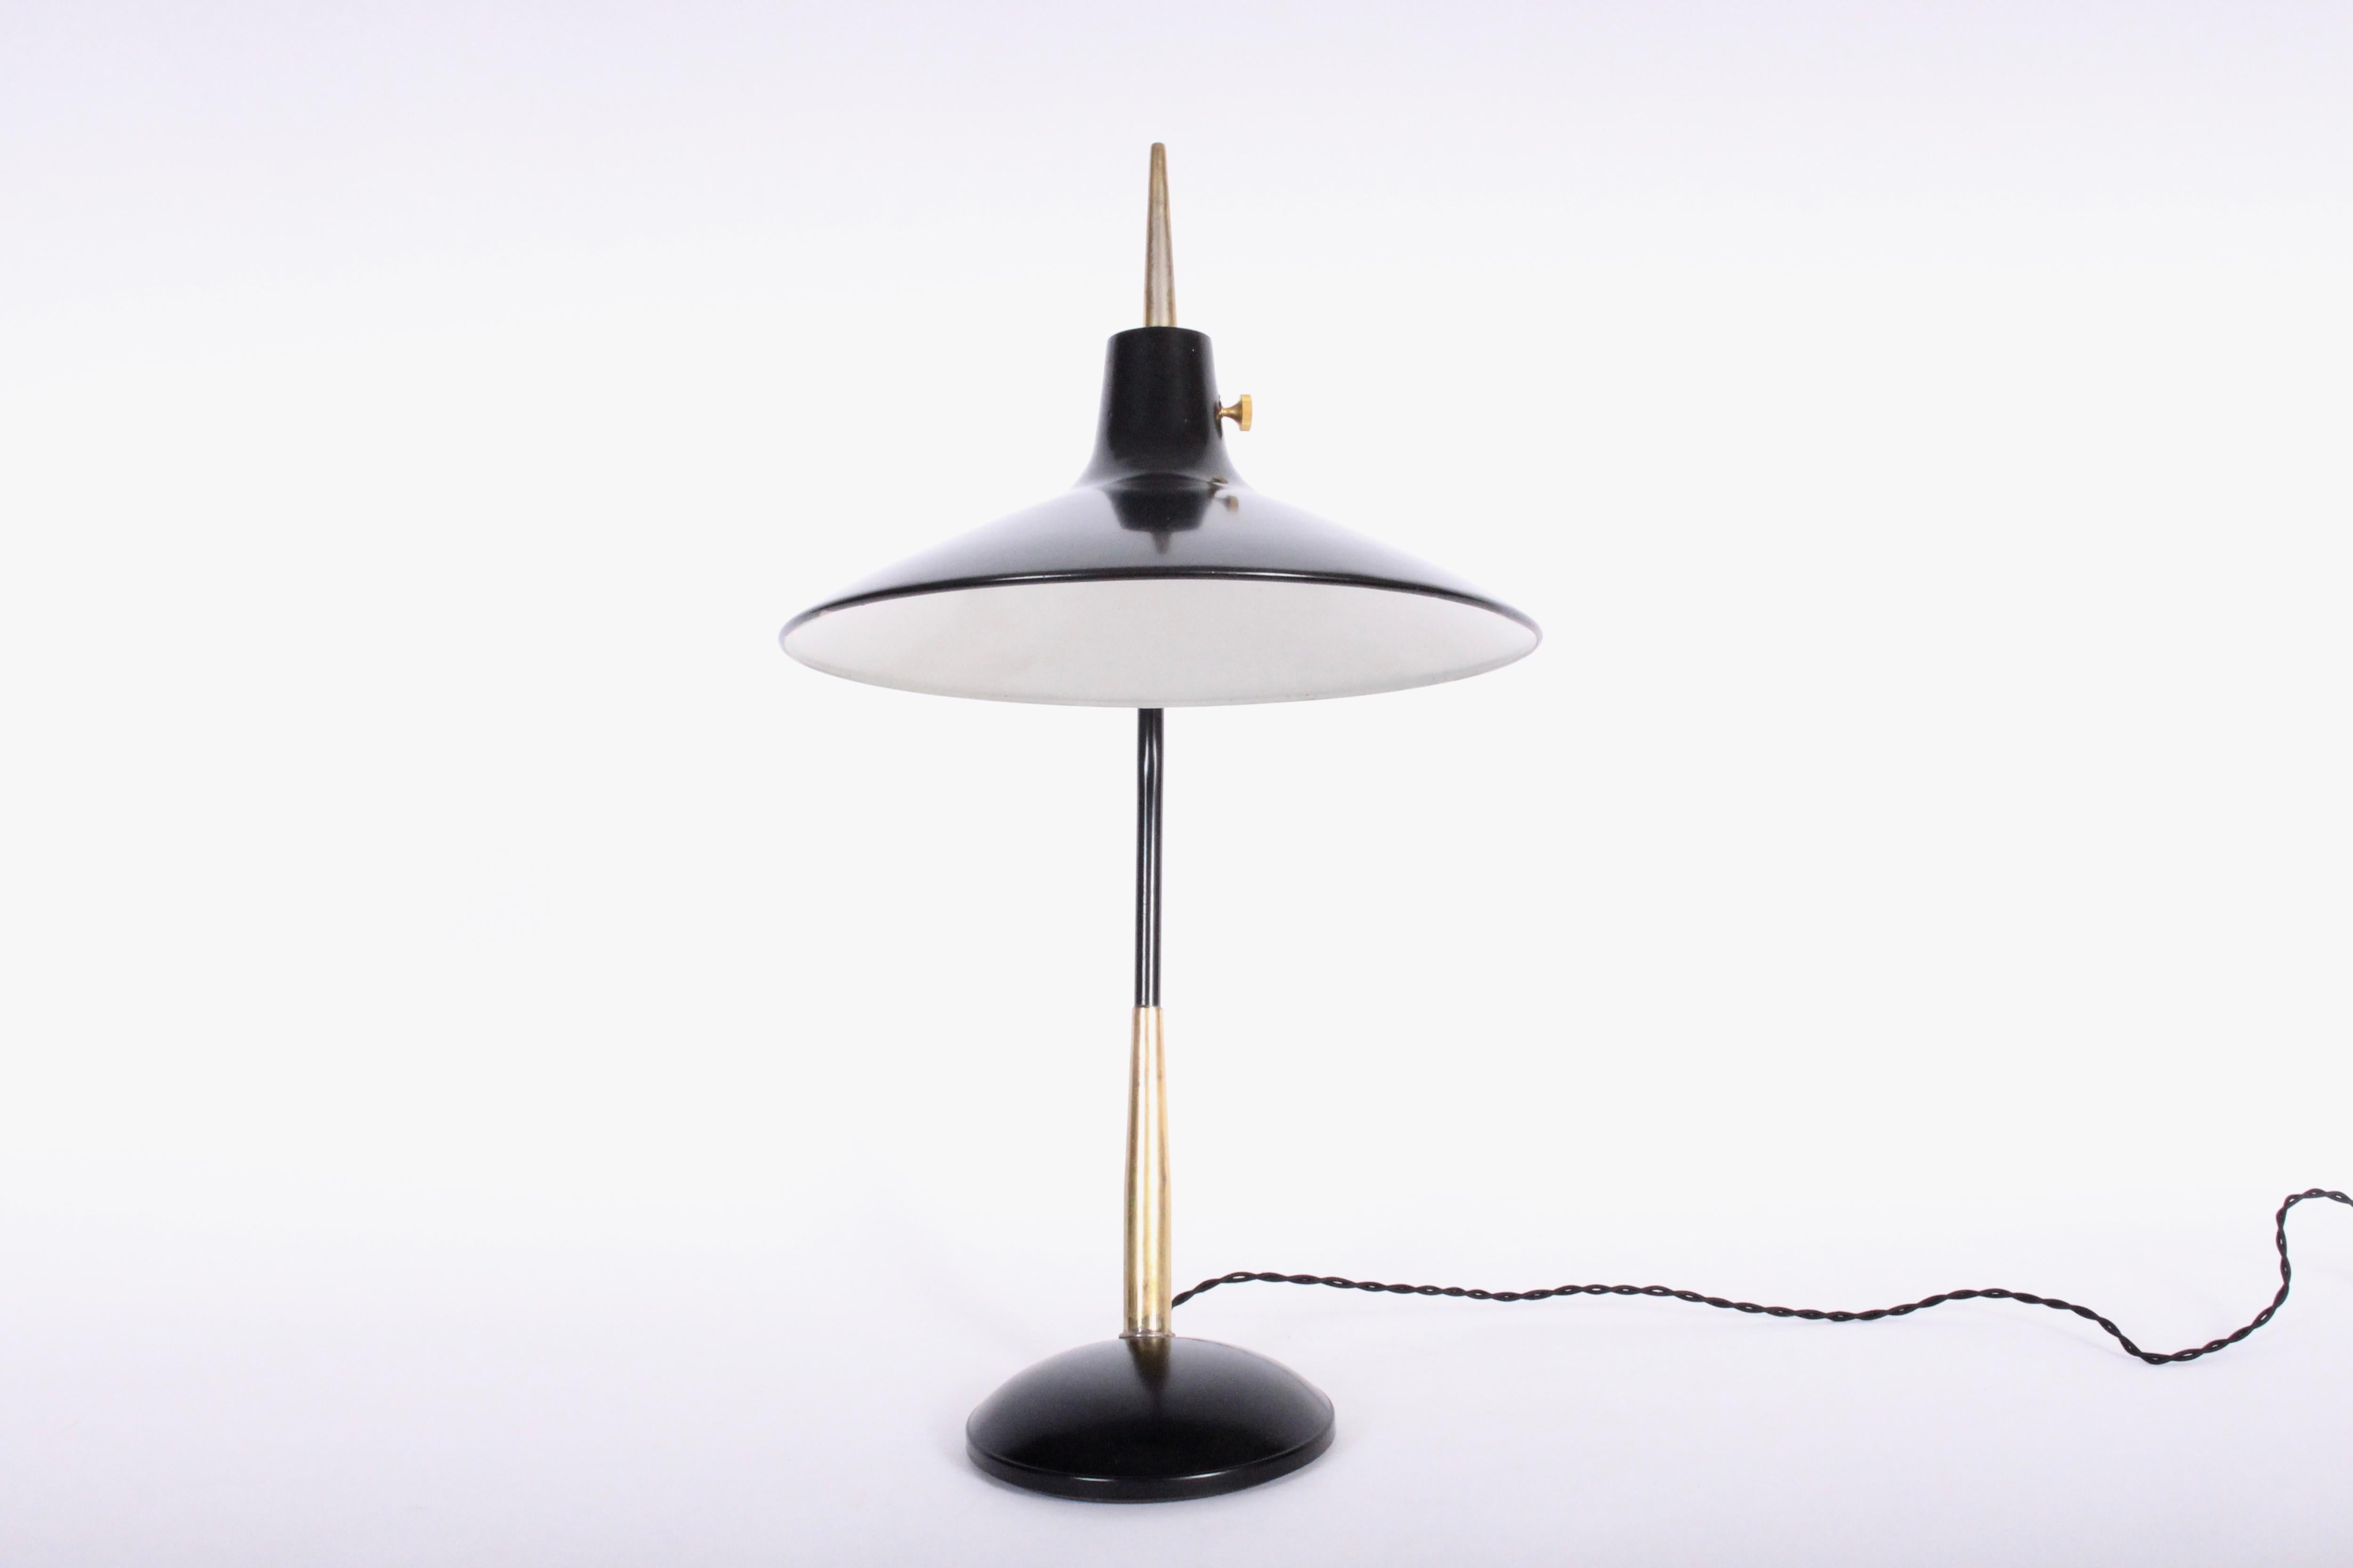 Mid-Century Modern Laurel Lamp Mfg. Co. Black and Brass Desk Lamp with Black Enamel Shade